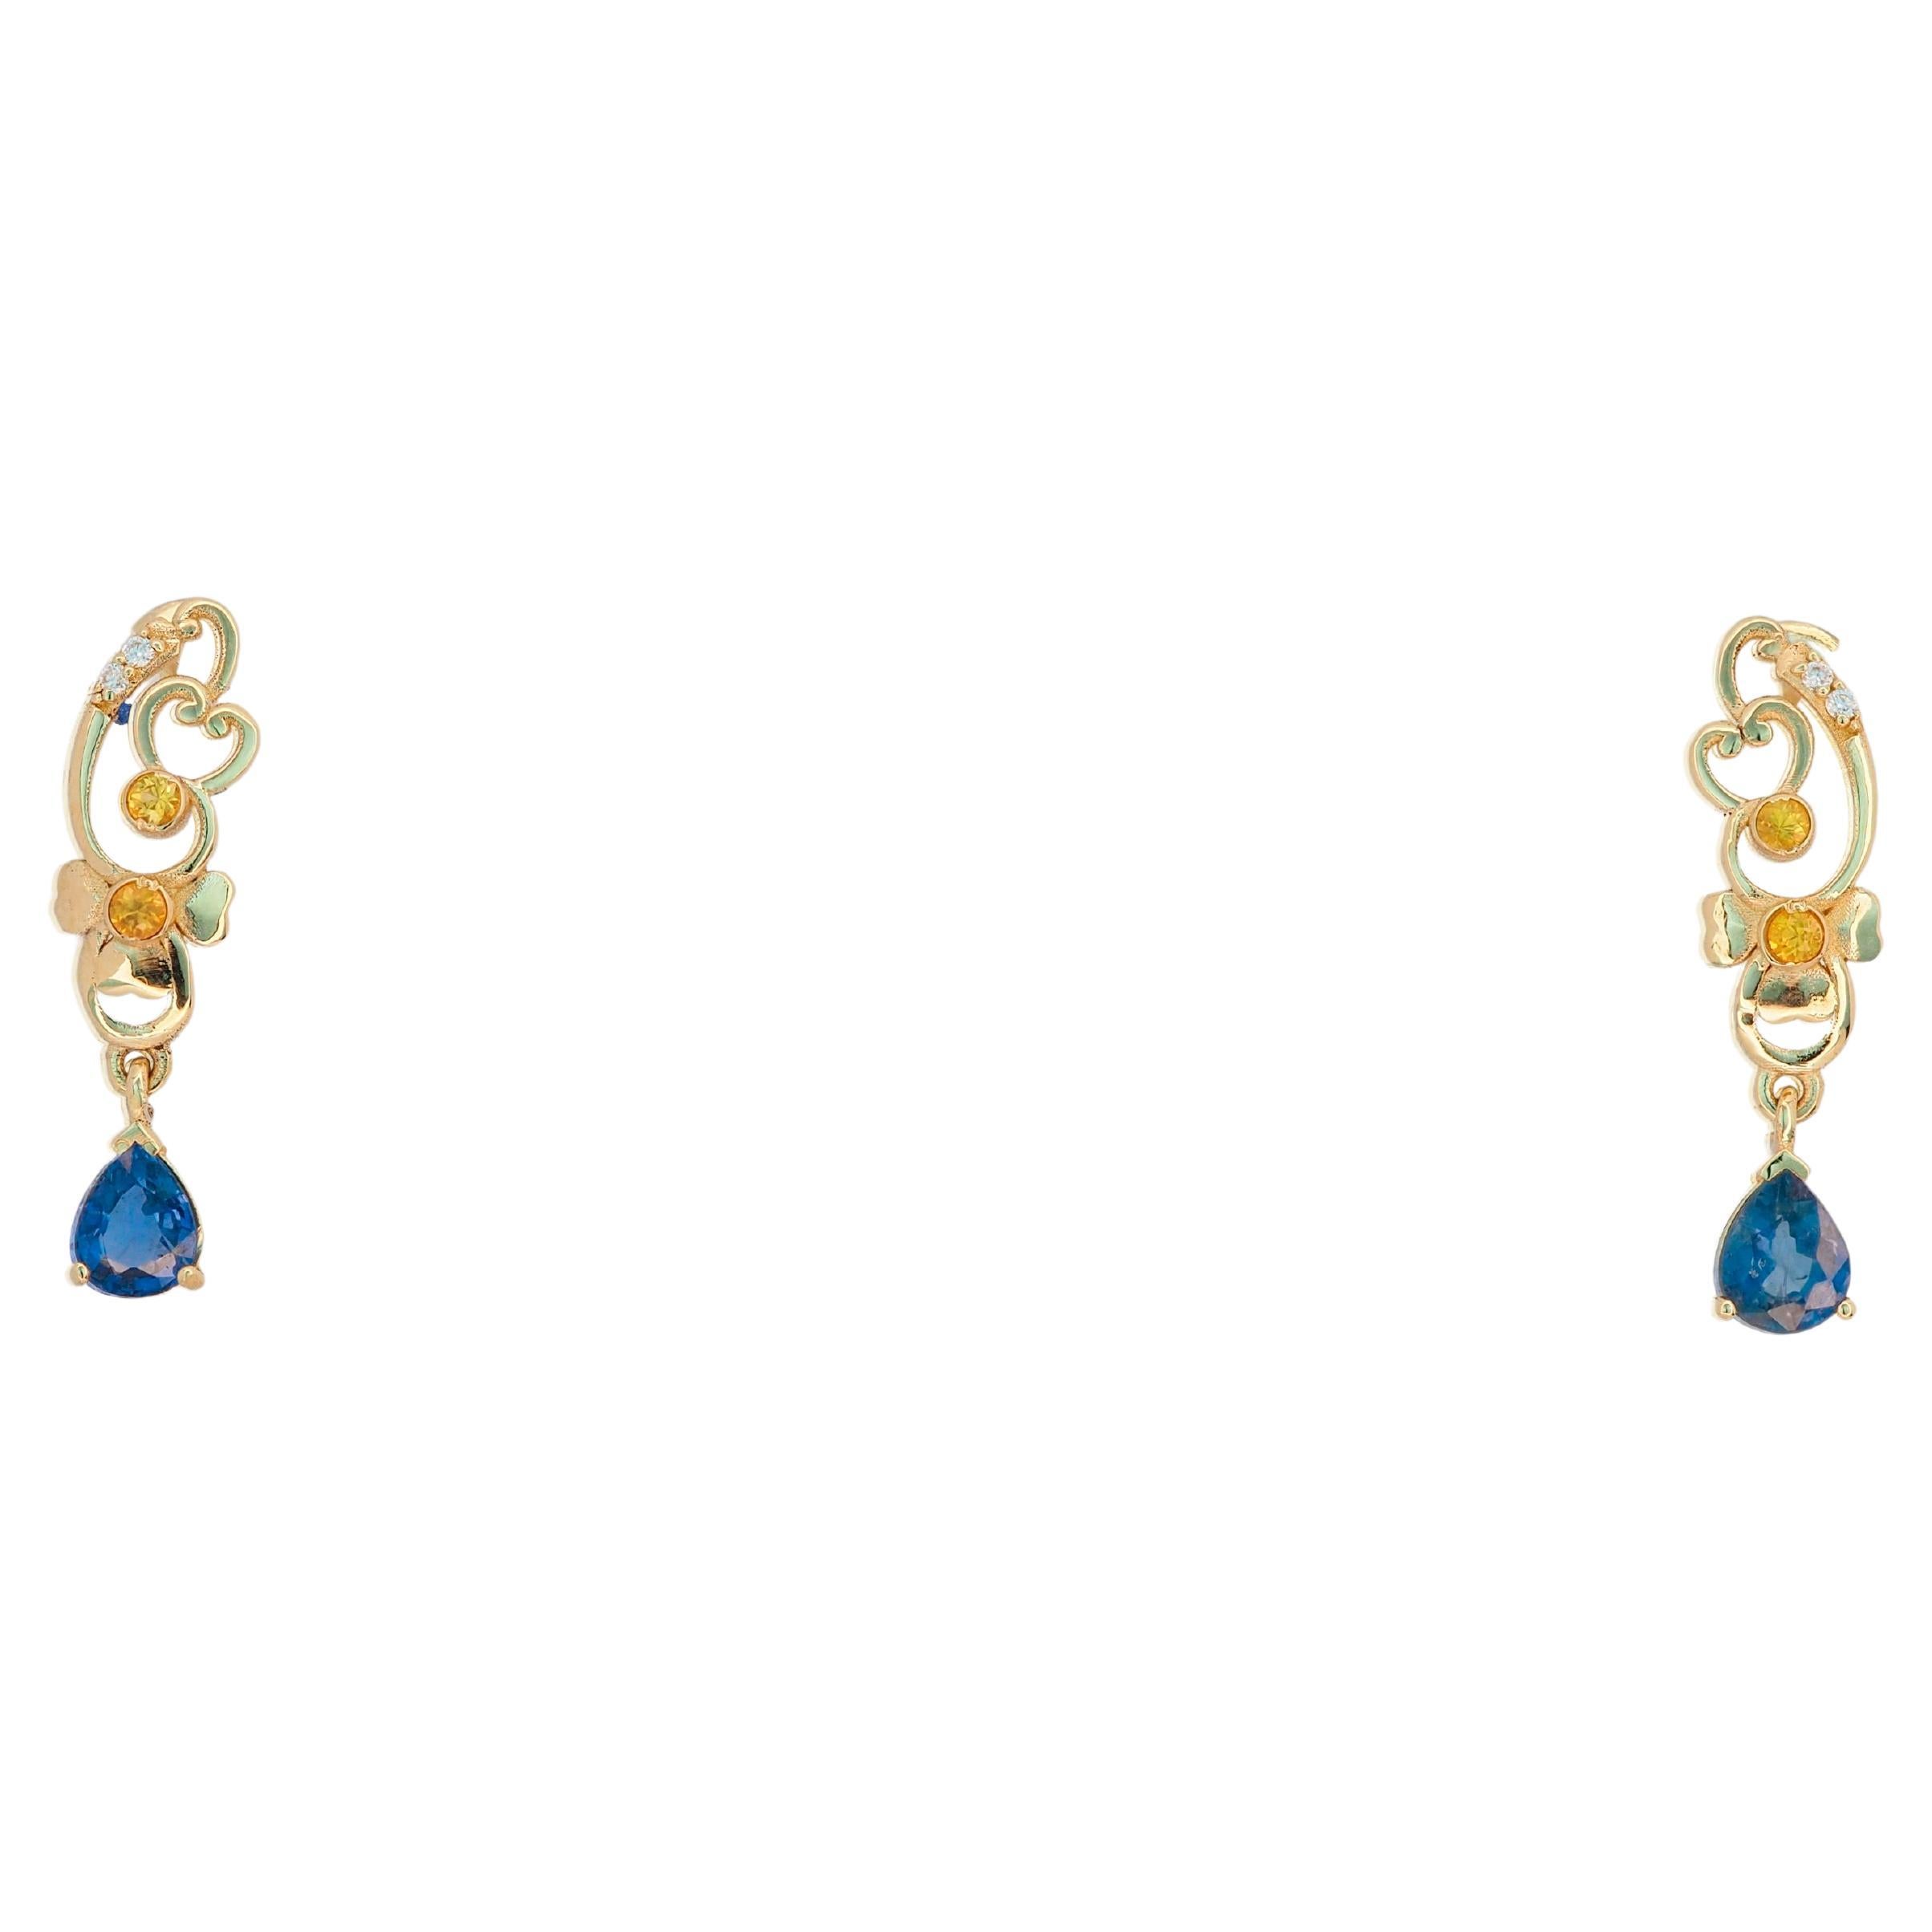 14 karat gold earrings studs with genuine sapphires and diamonds. September birthstone.
Metal: 14 karat gold.
Weight: 2.3 g.
Size: 22.5 x 6 mm.
Gemstones:
1. Genuine blue sapphires: 2 pieces, weight - 0.60 ct x 2 = 1.20 ct total, blue color, pear